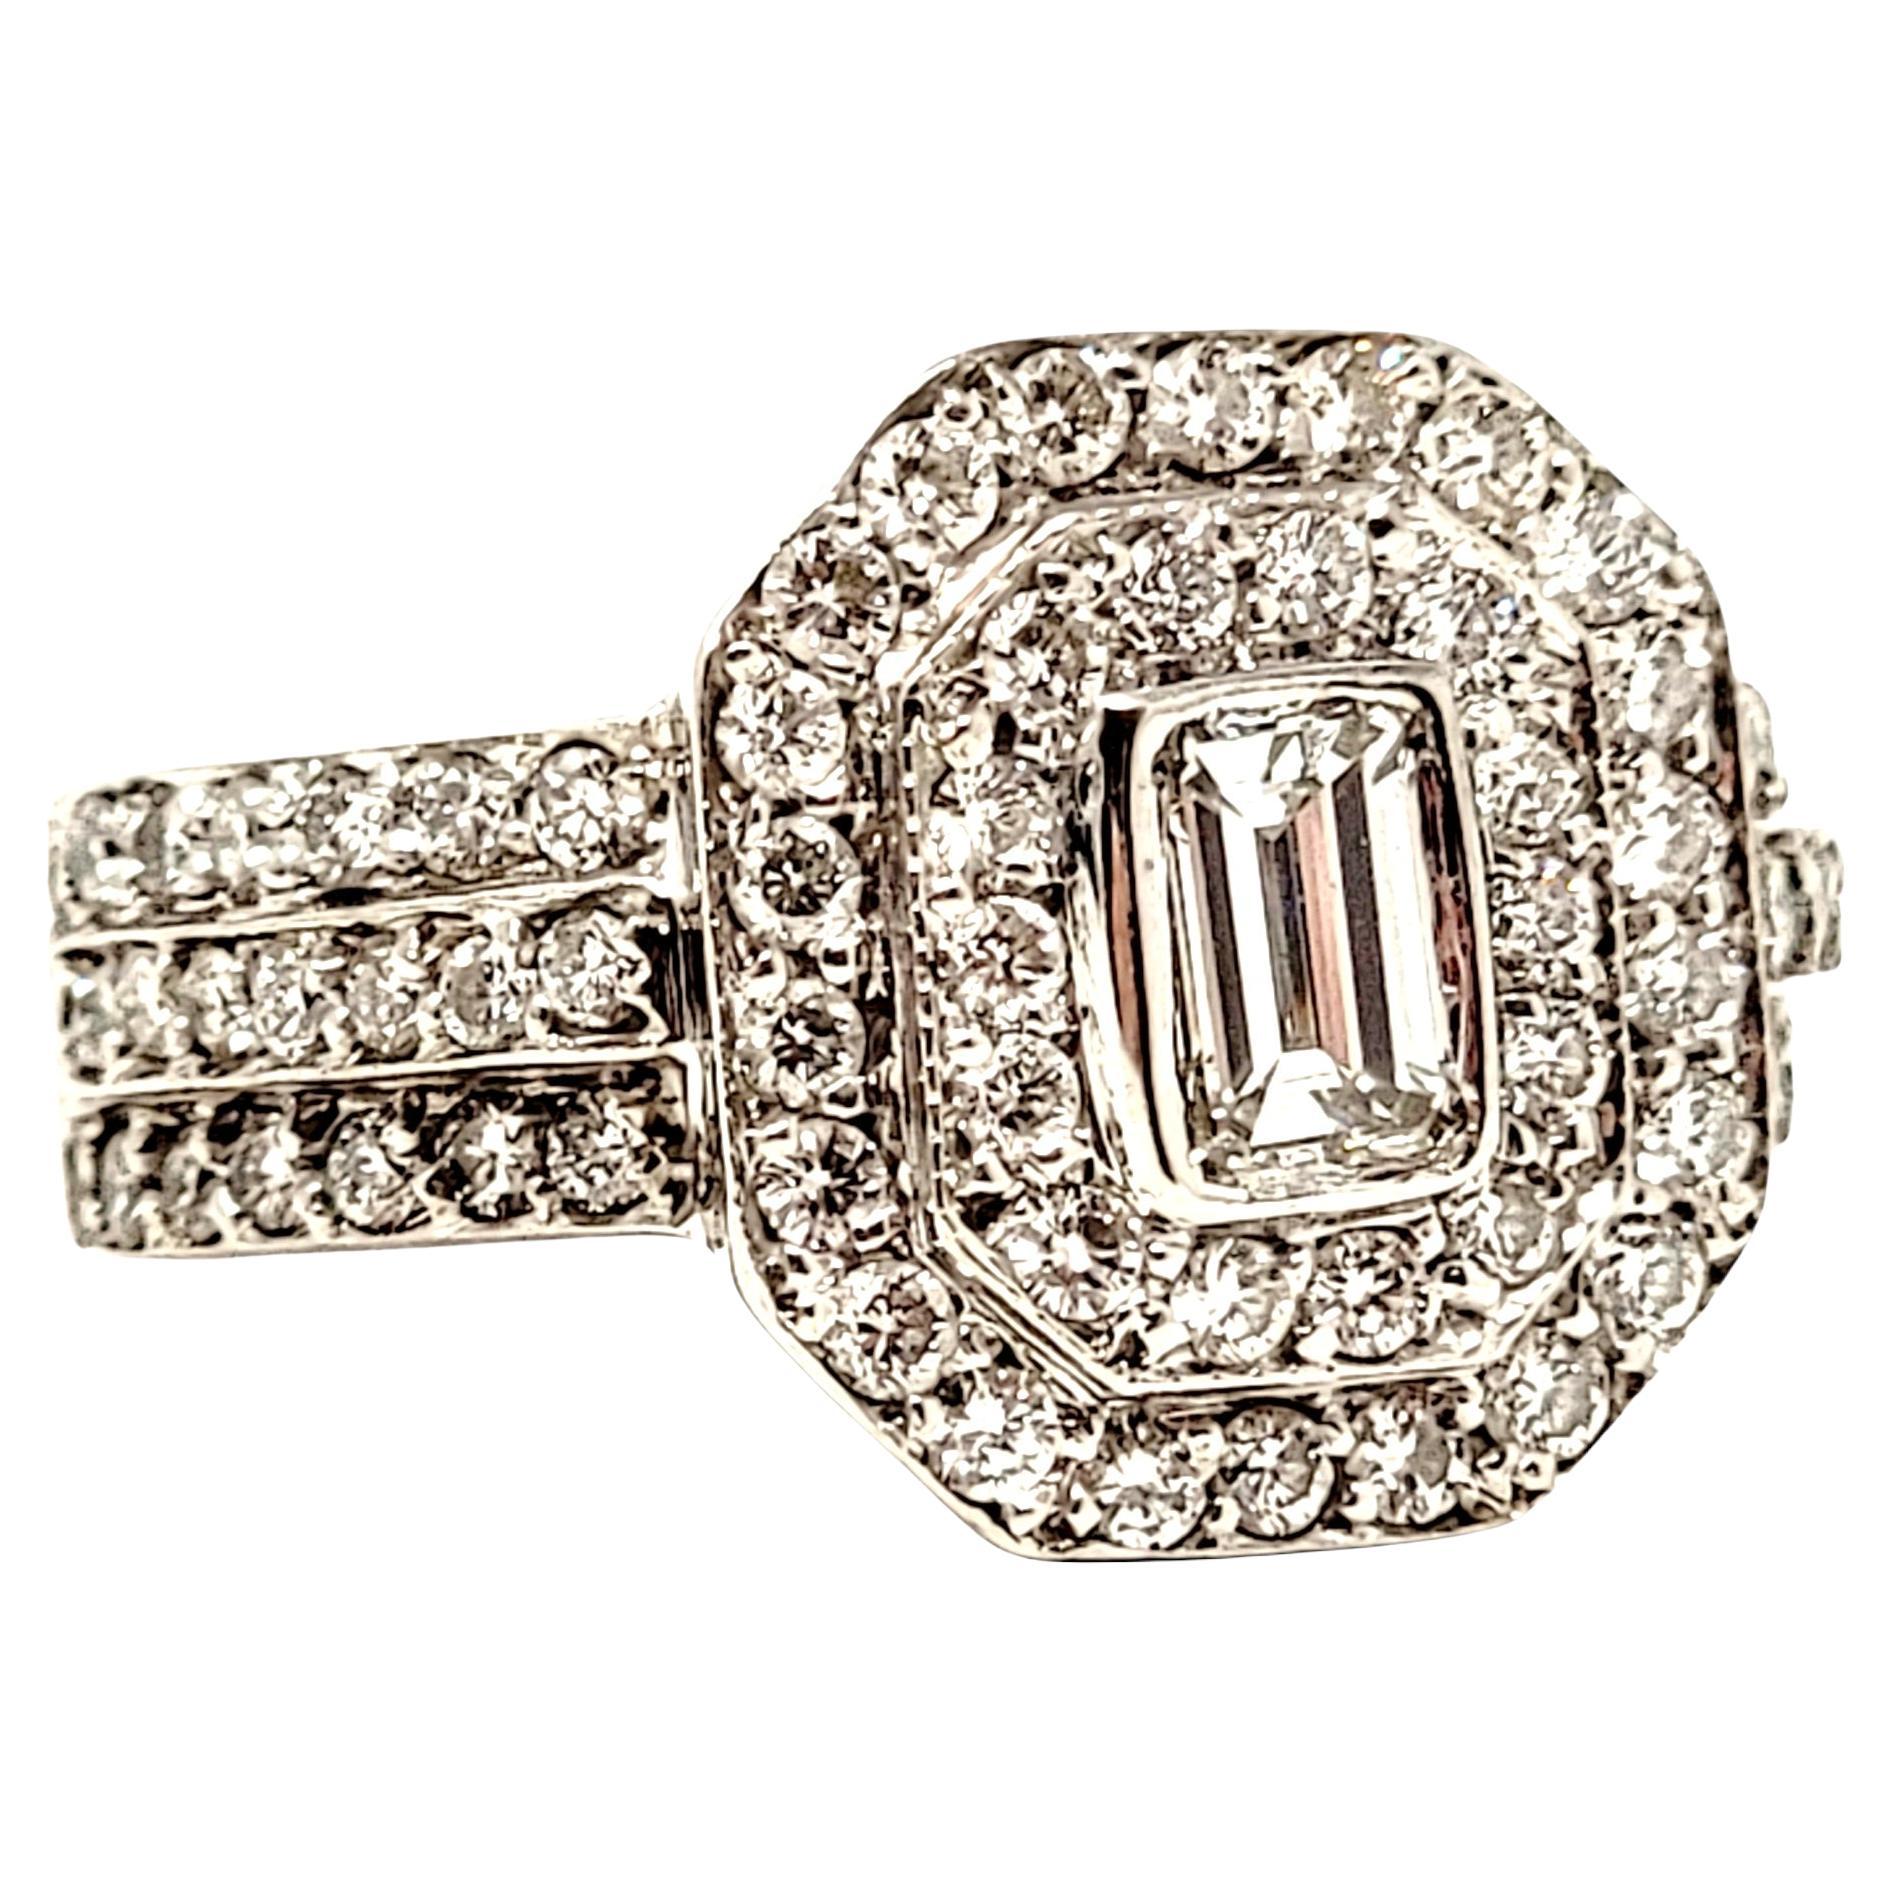 Double Halo Emerald Cut Diamond Multi Row Band Ring in 14 Karat White Gold